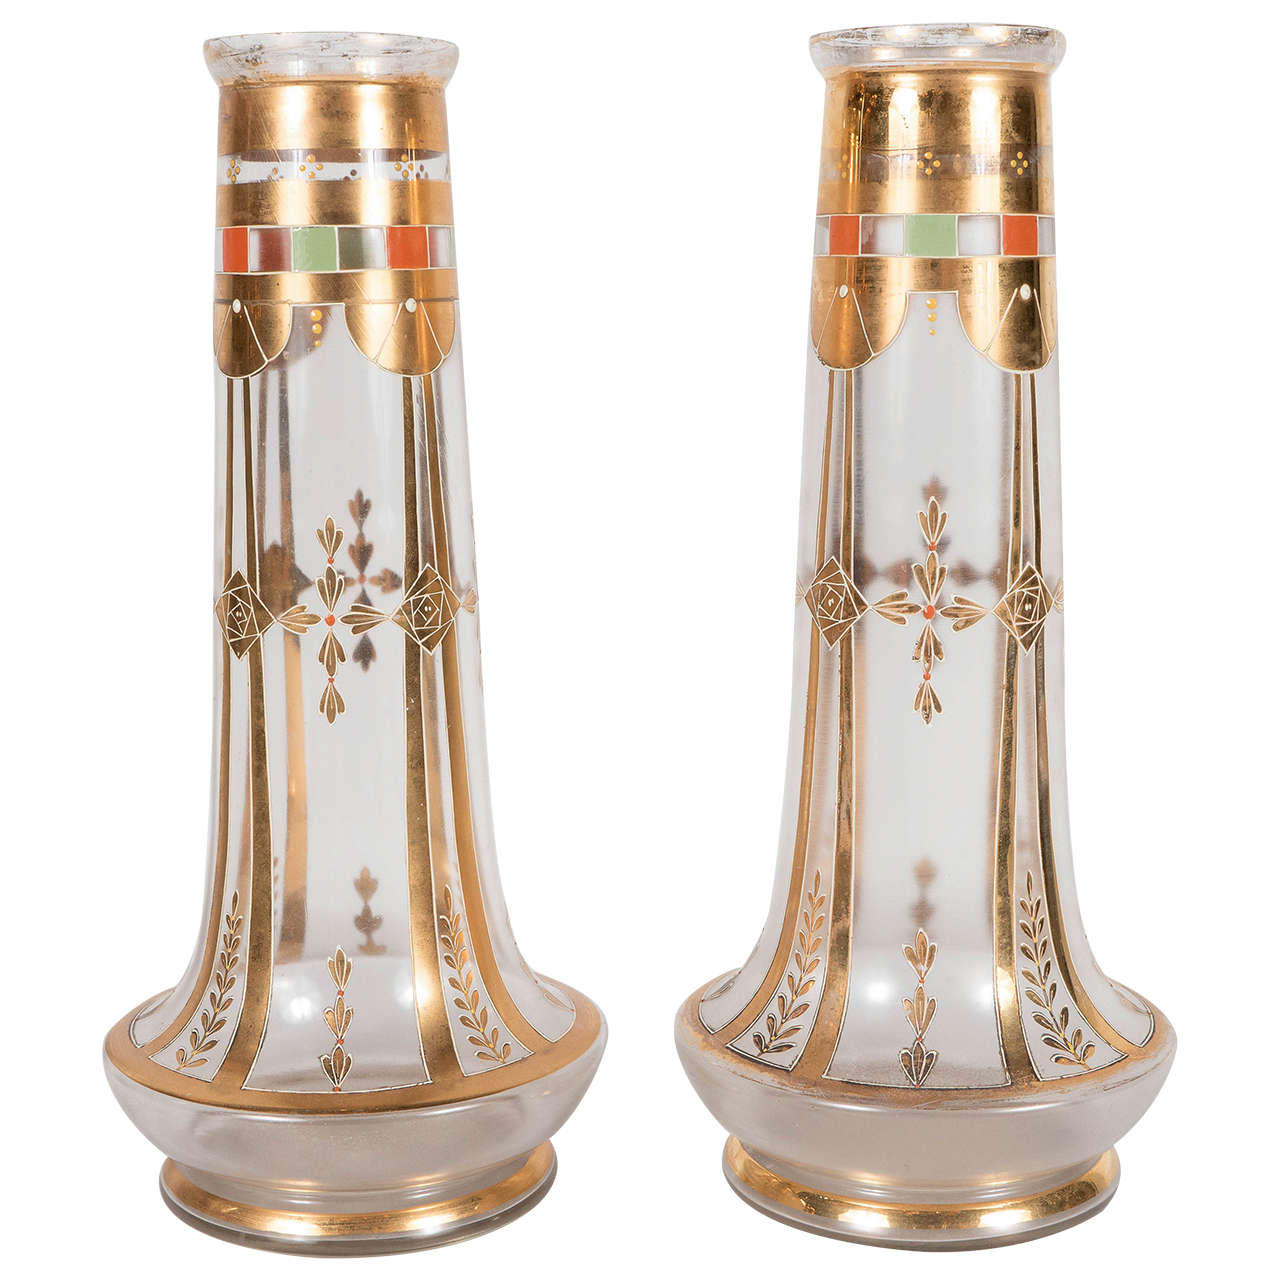 Exquisite Pair of Art Deco Glass Vases with 24-Karat Gold Relief Decoration